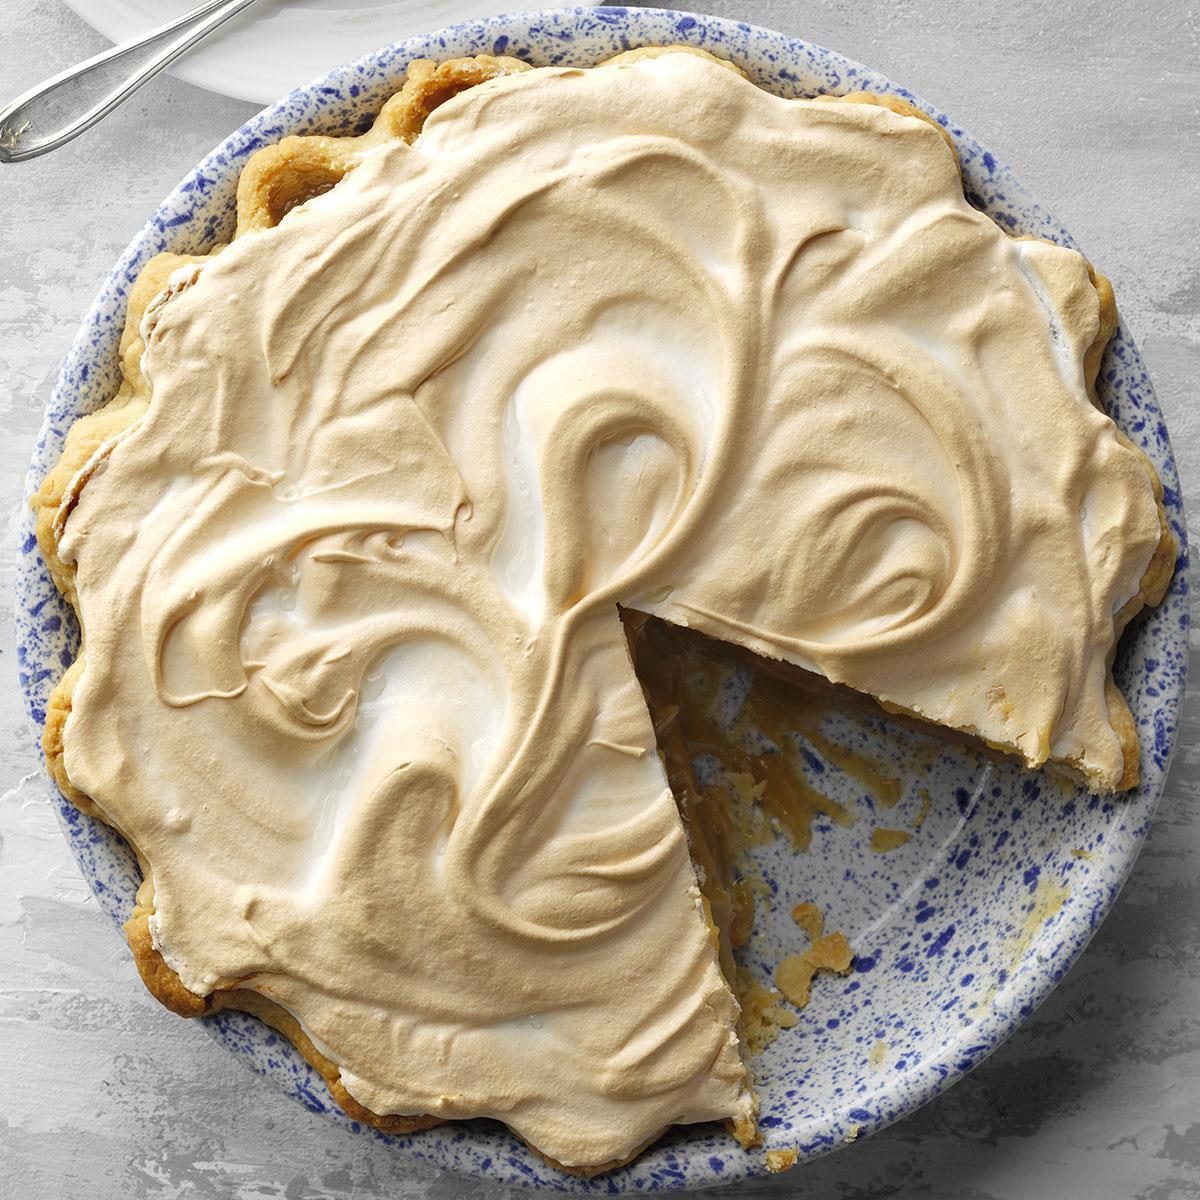 Missouri: Butterscotch Pie